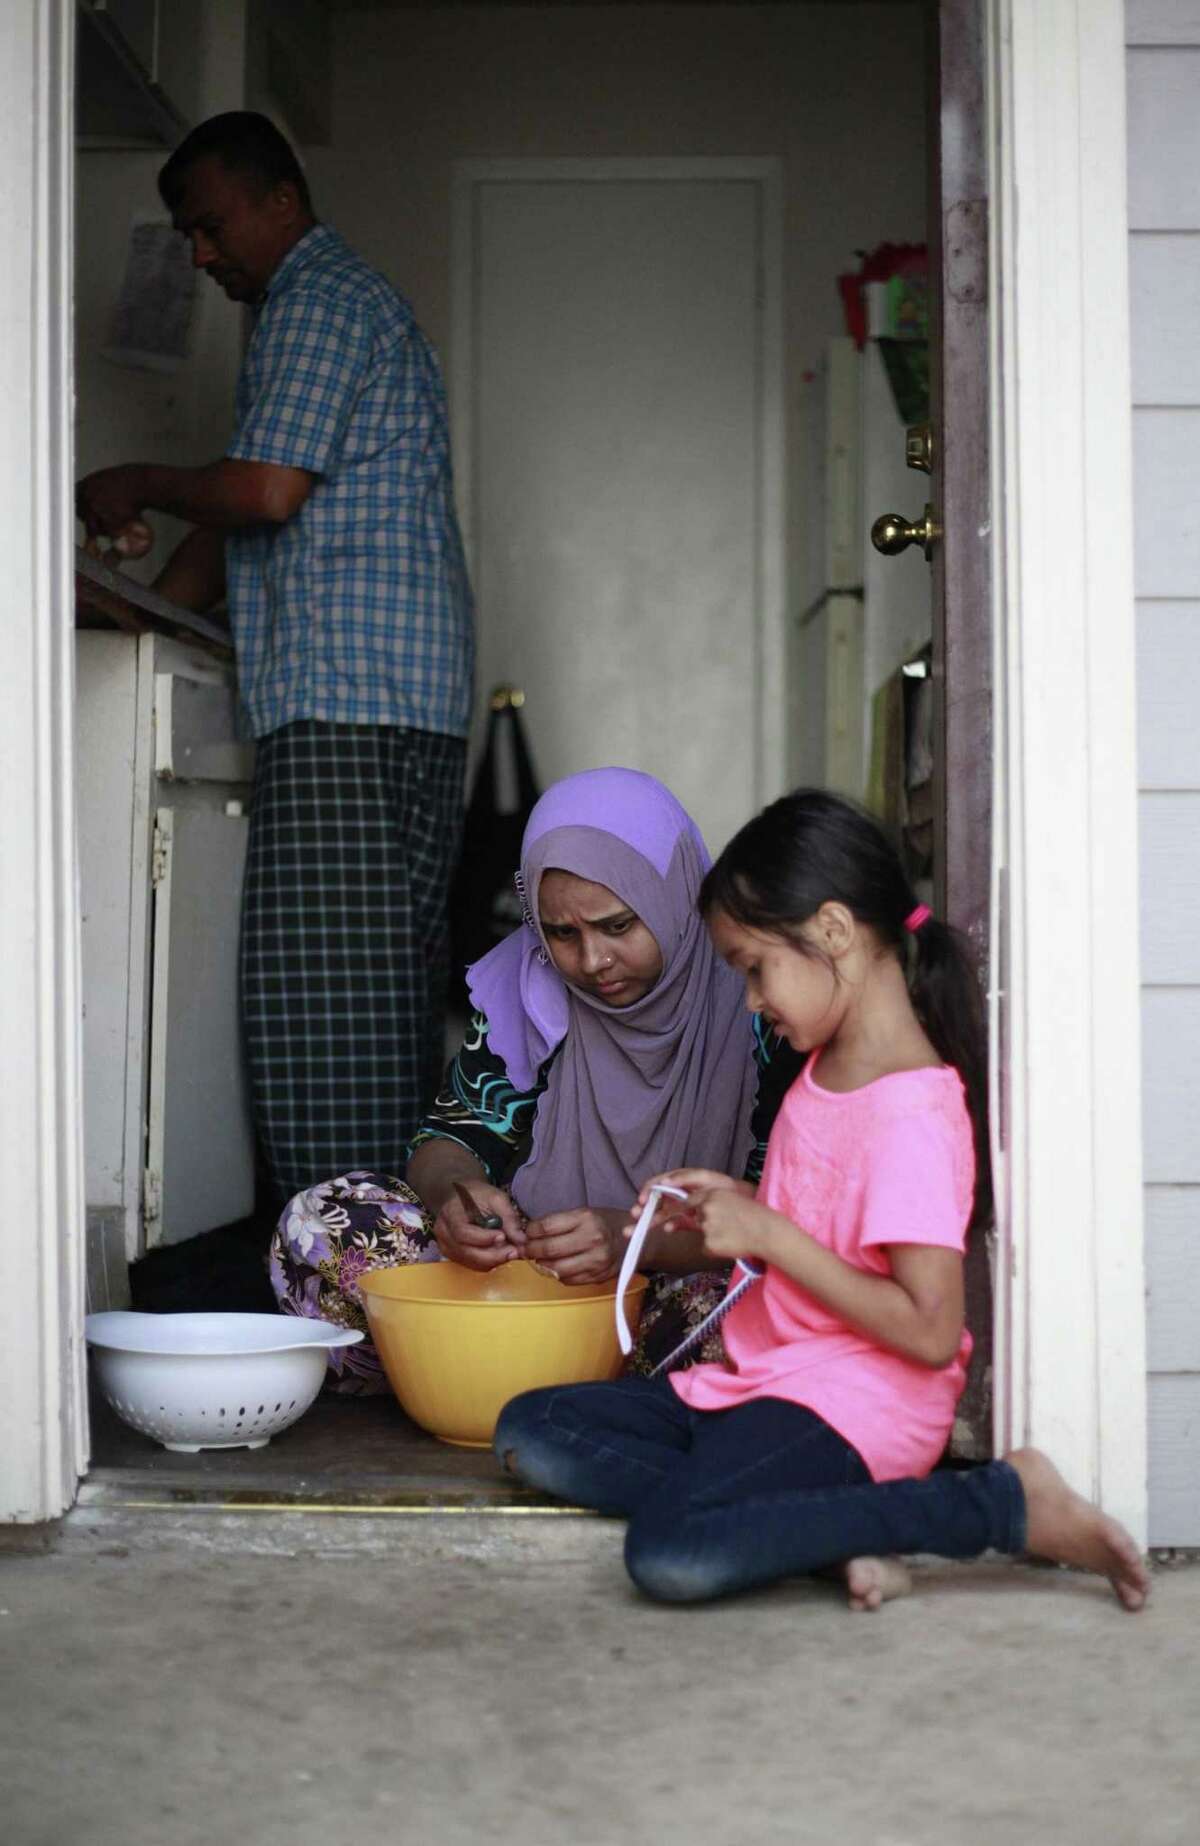 Siti Nur Anisha Binti Mohamad Rashid, 7, shows her mother Saidah Binti Yasin her heart-shaped sunglass as her mother and her father Mohamad Rashid Bin Nurislam prepare dinner.